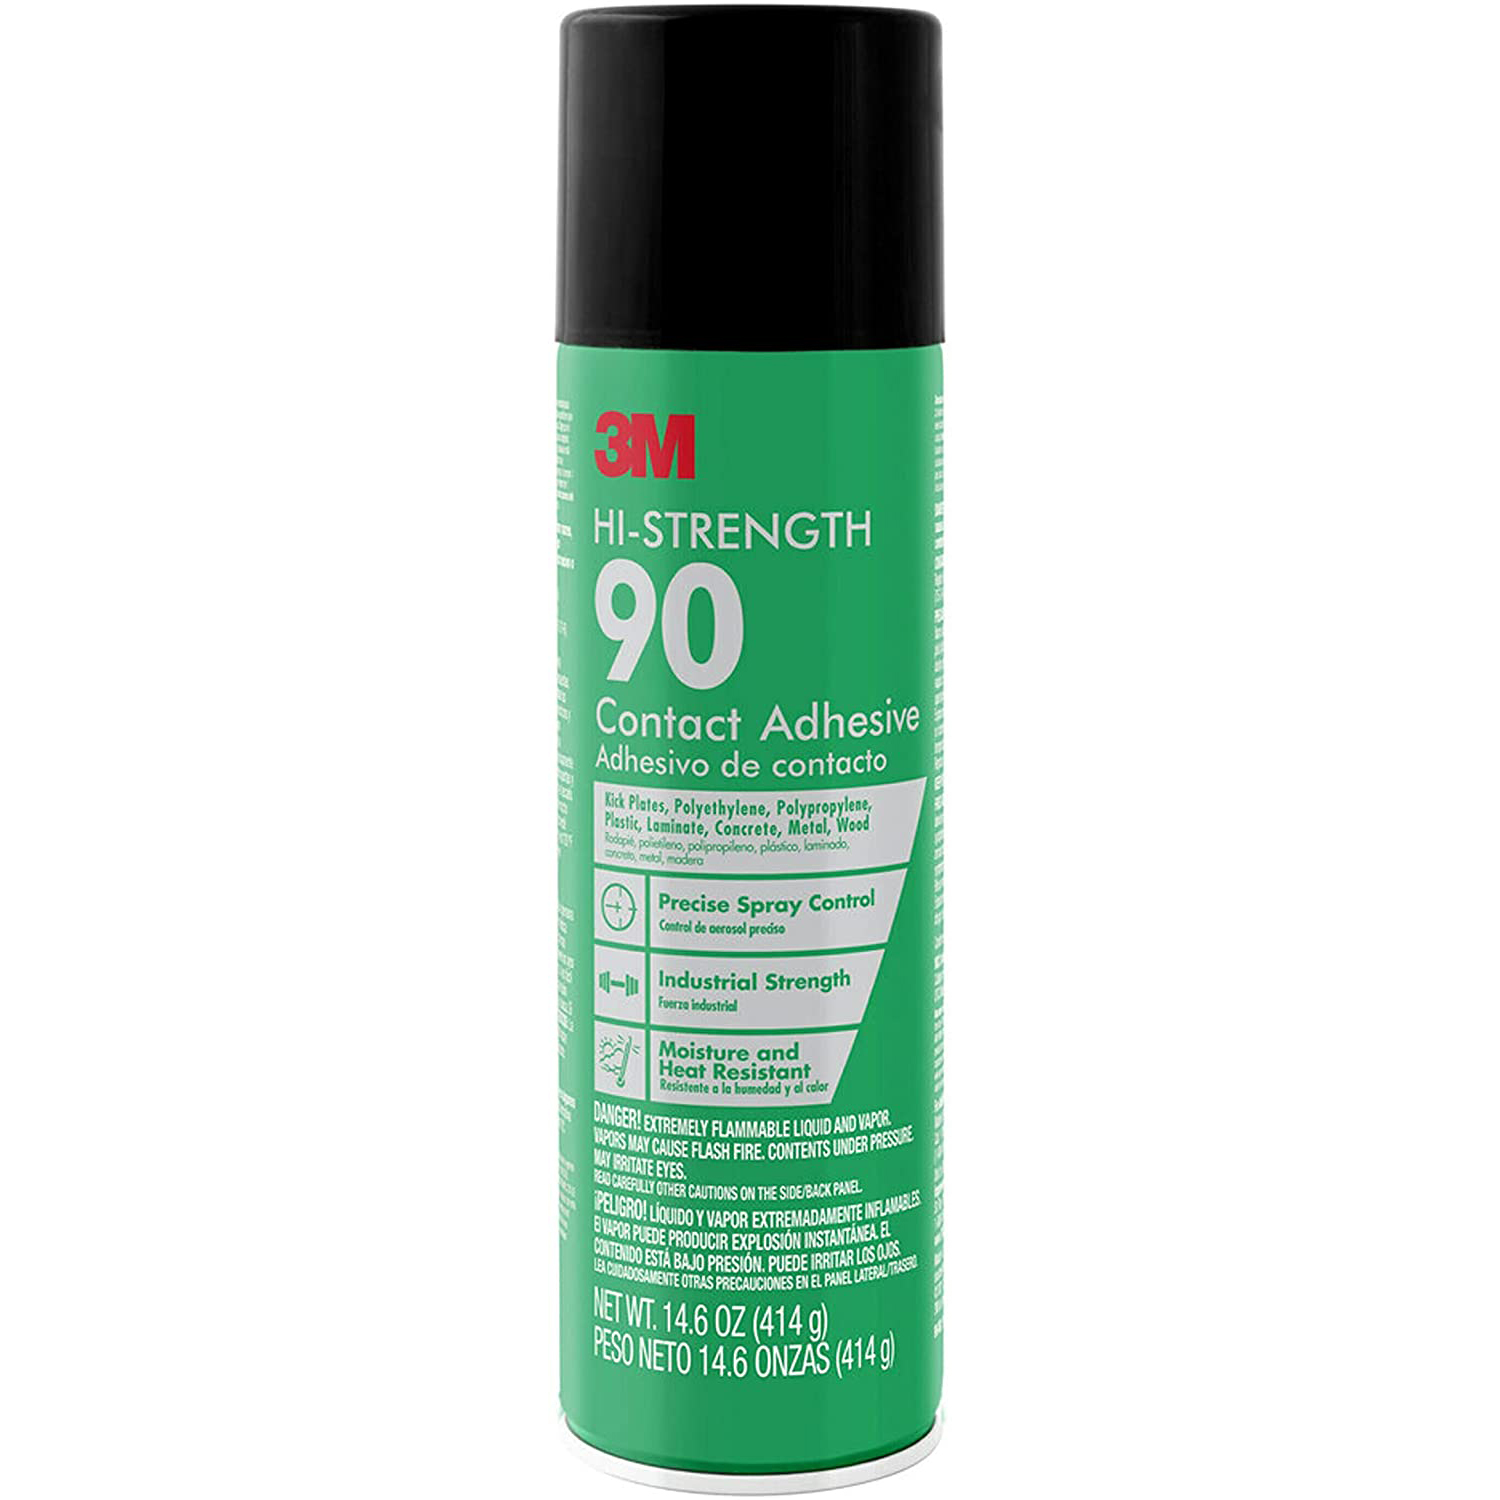 3M 90 Hi-Strength Spray Adhesive